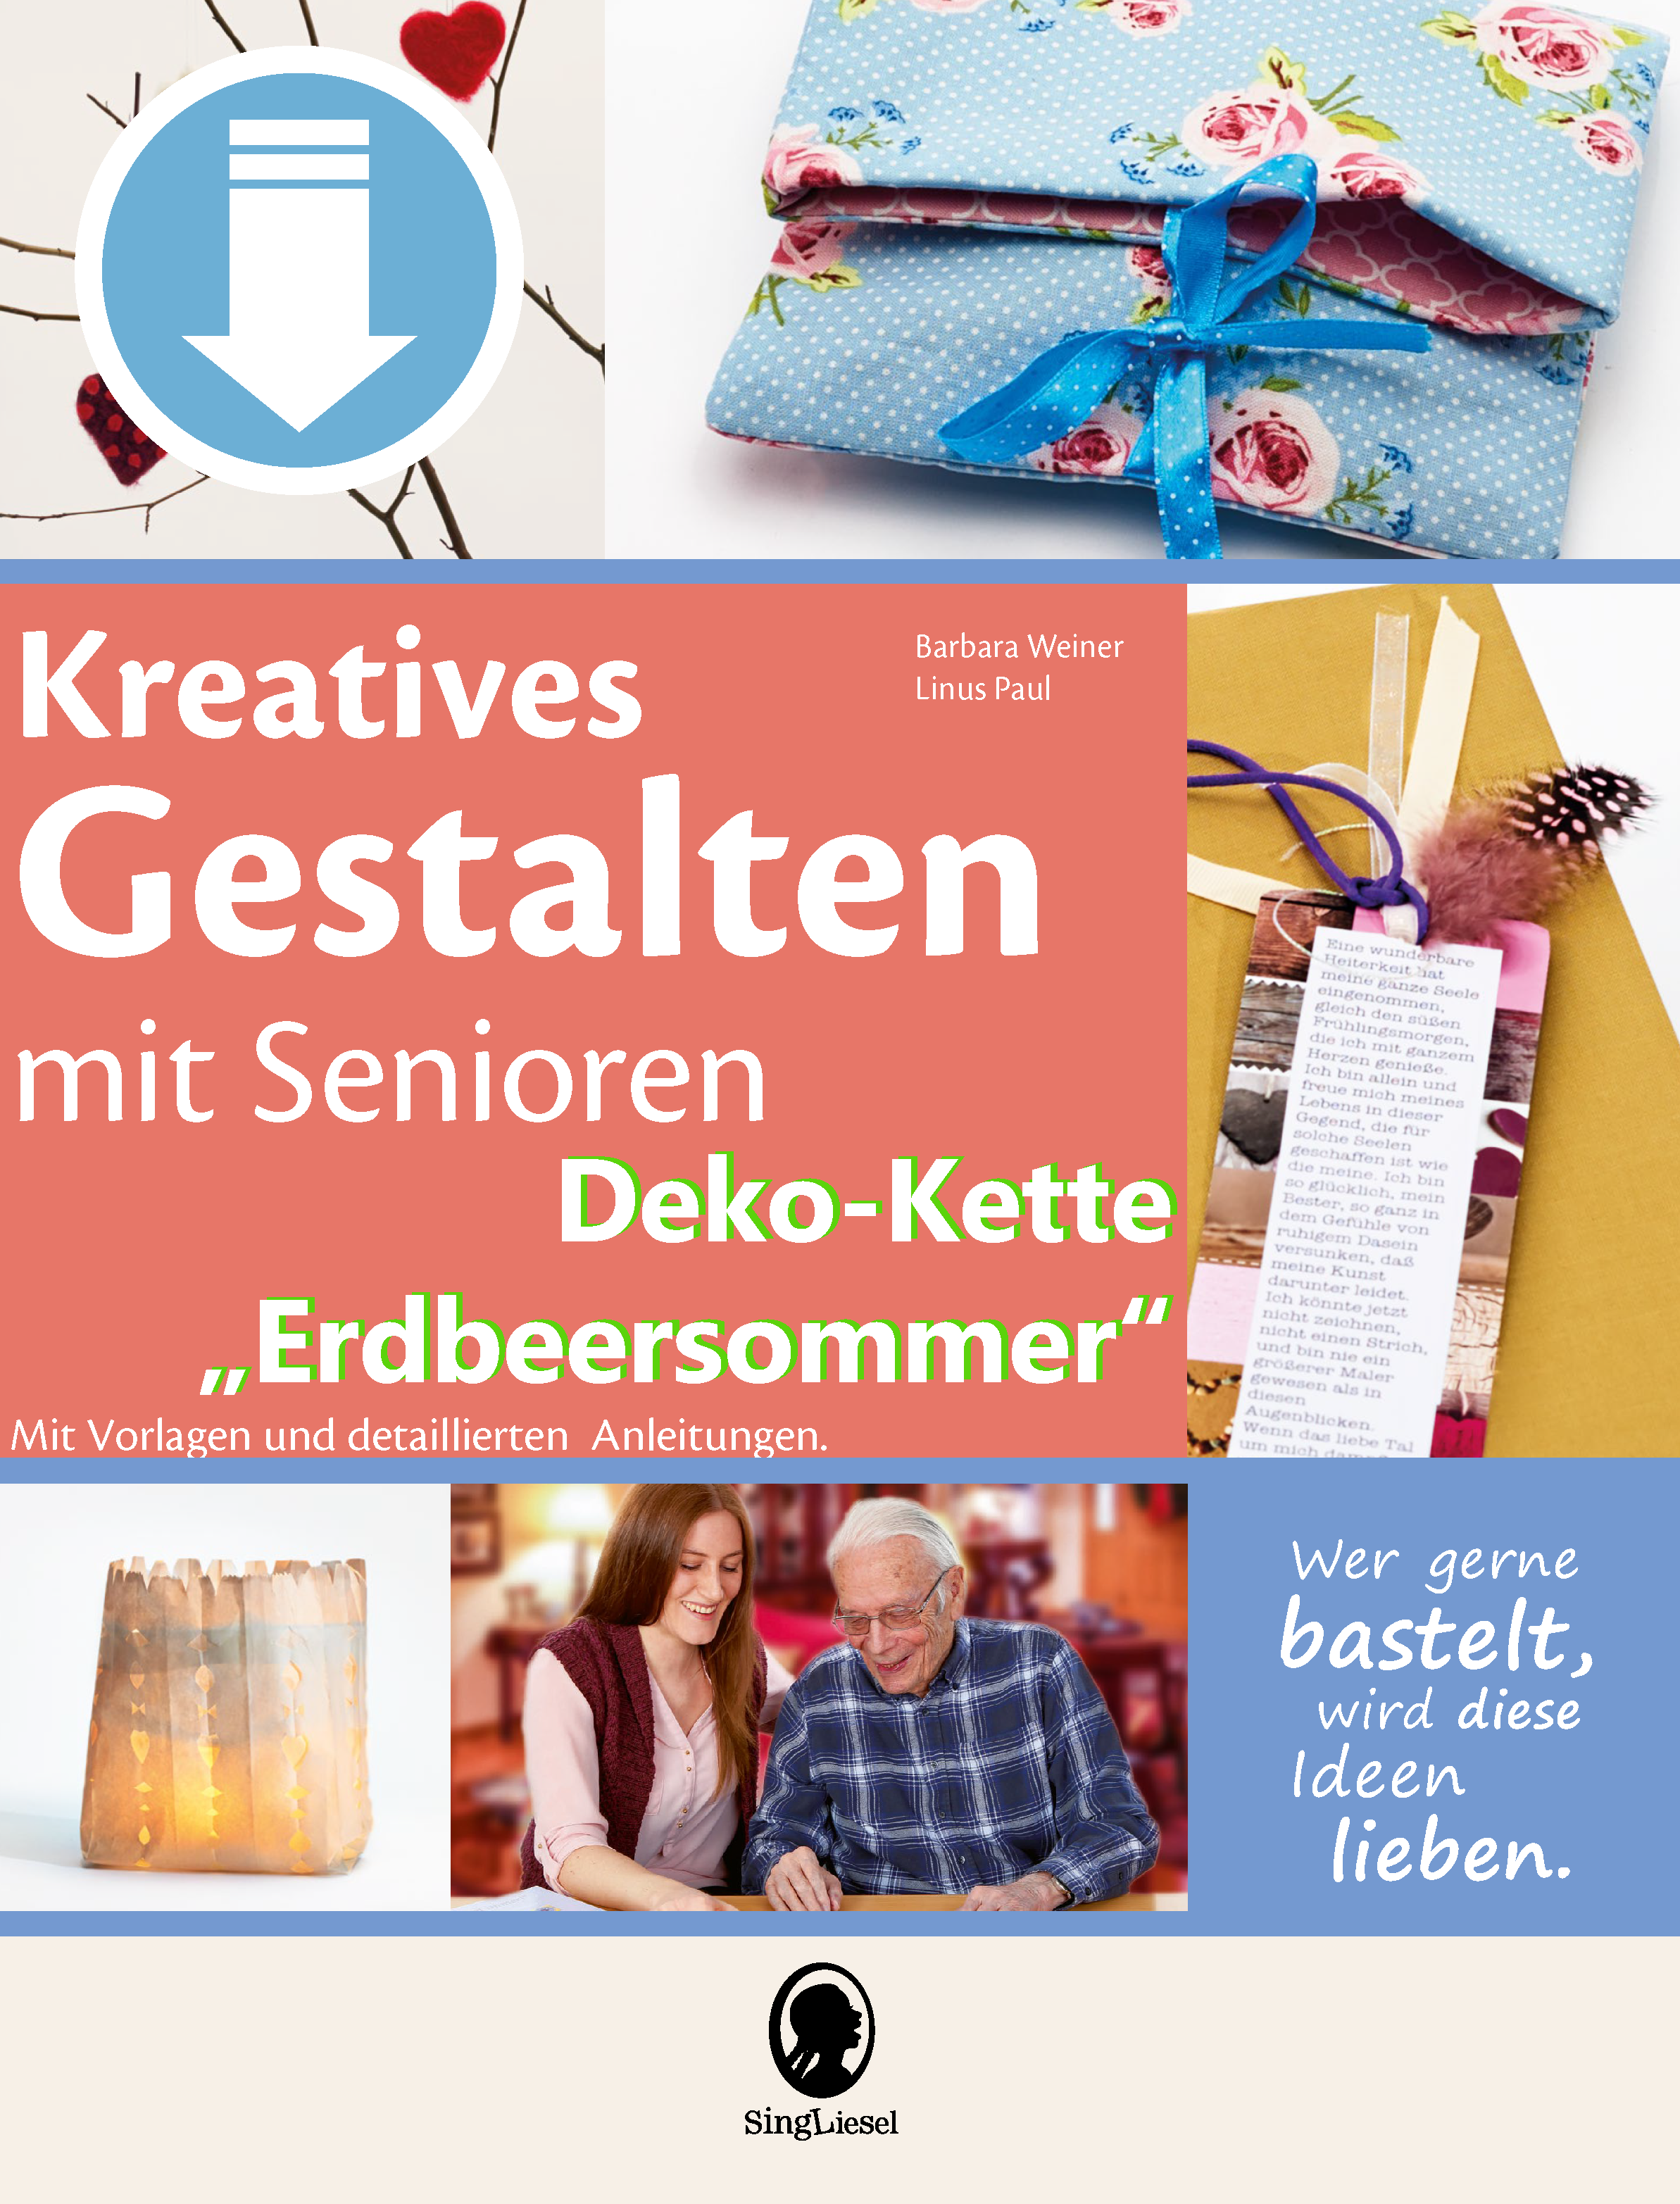 Bastel Ideen- Deko-Kette SingLiesel - Erdbeere - Erdbeersommer